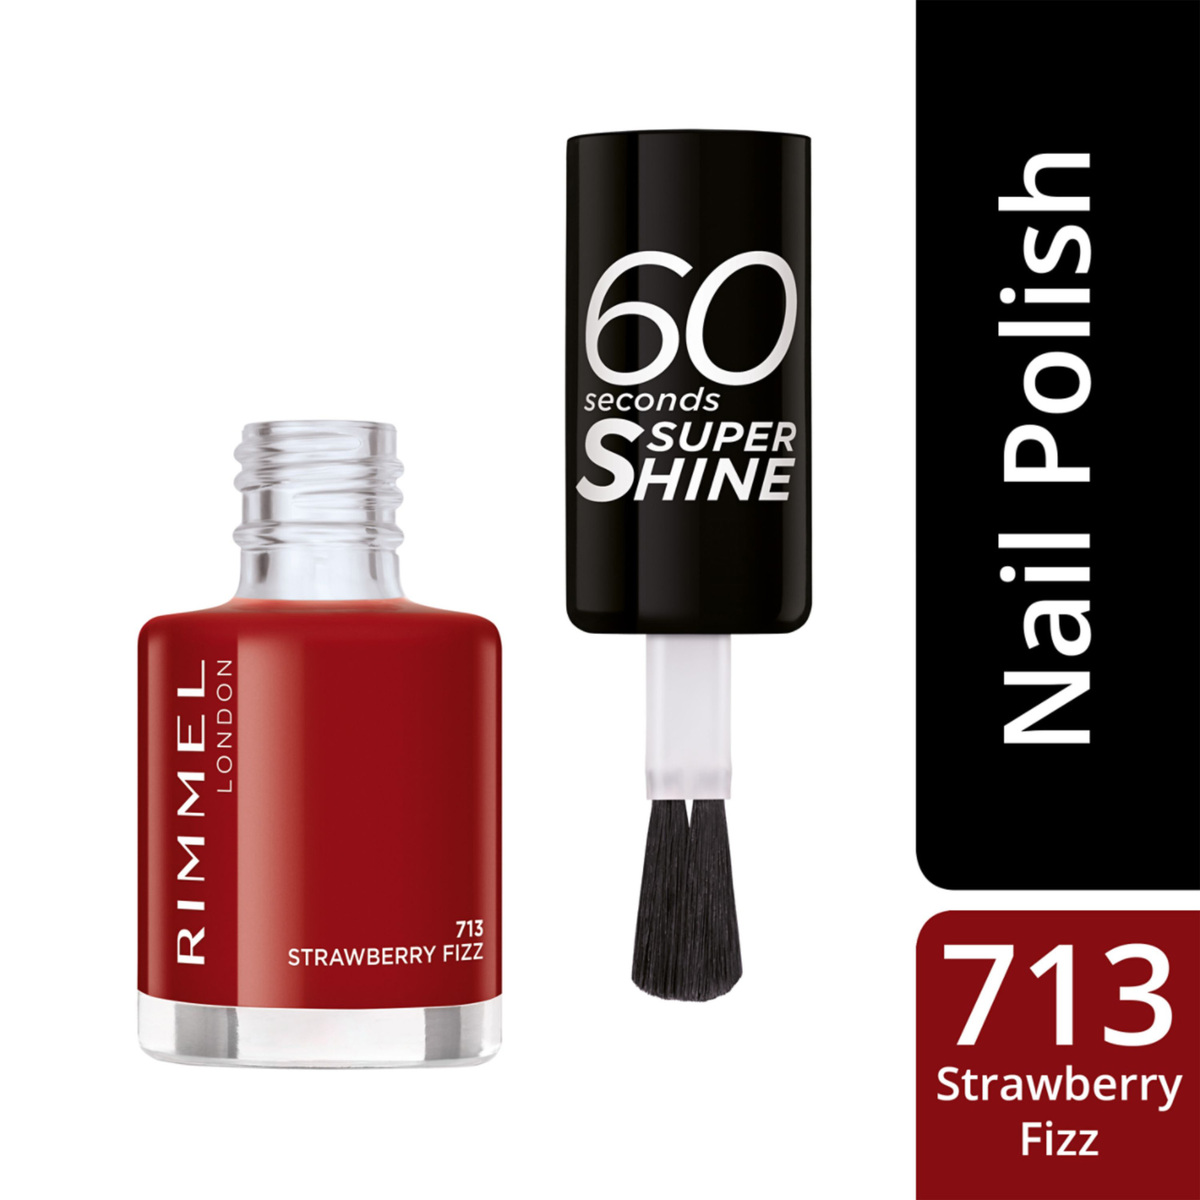 Rimmel London 60 Seconds Super Shine Nail Polish, 713 Strawberry Fizz, 8 ml - 0.25 fl oz